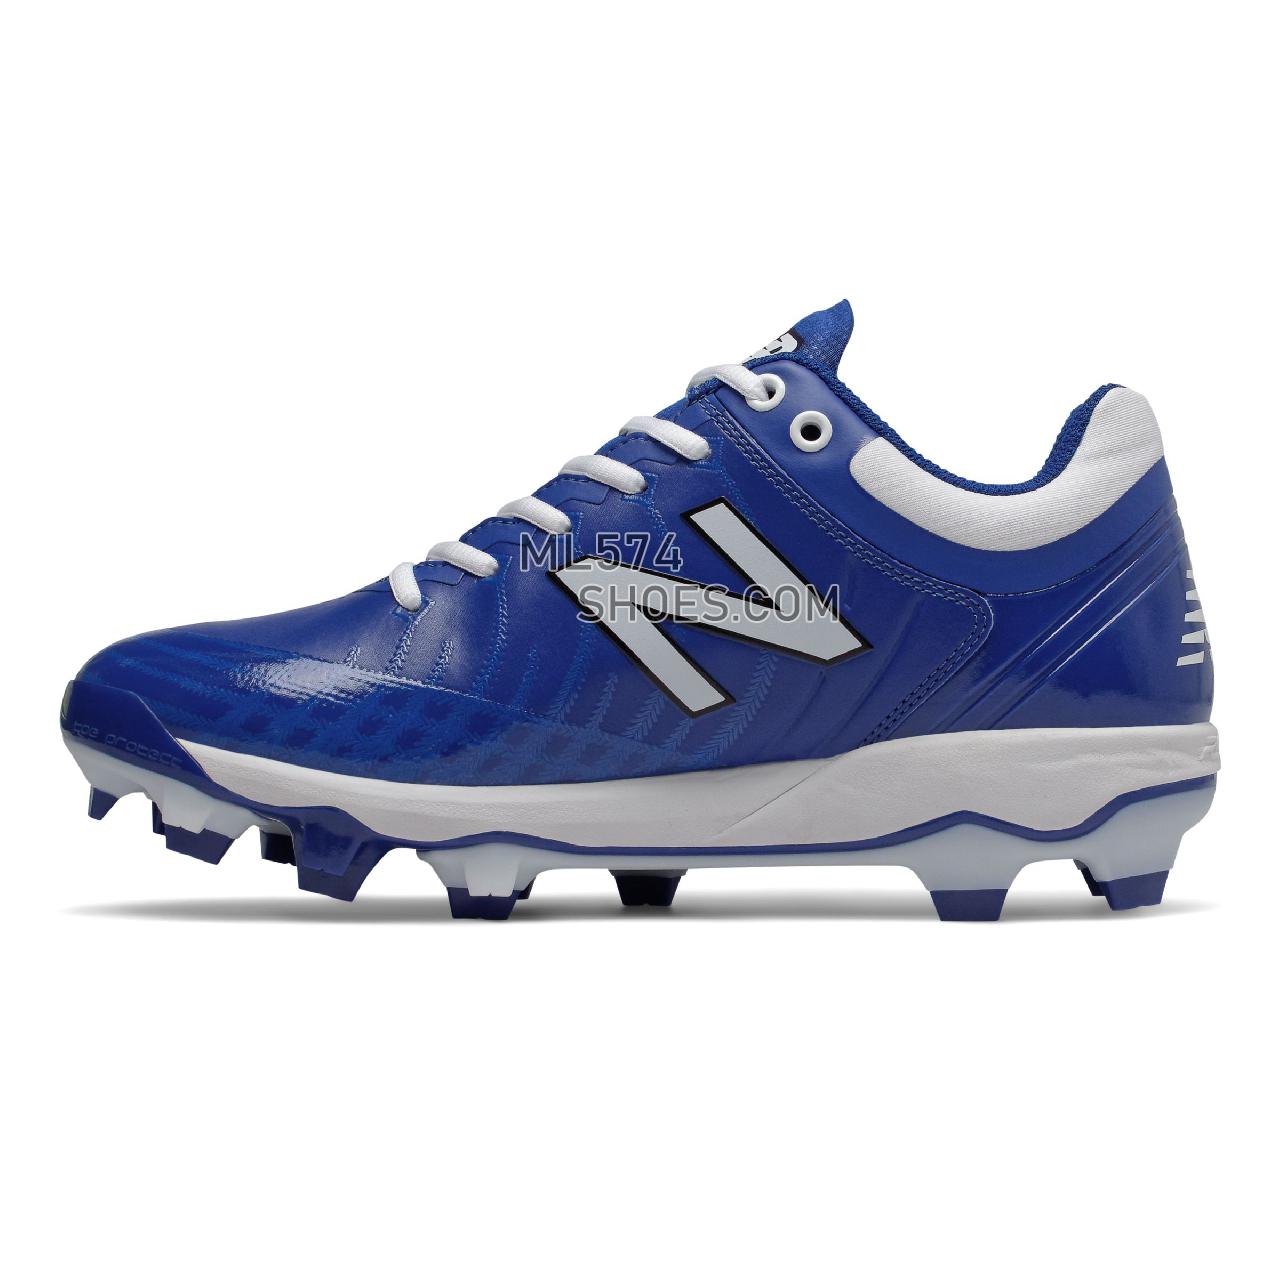 New Balance 4040v5 TPU - Men's Baseball Turf - Royal Blue with White - PL4040B5